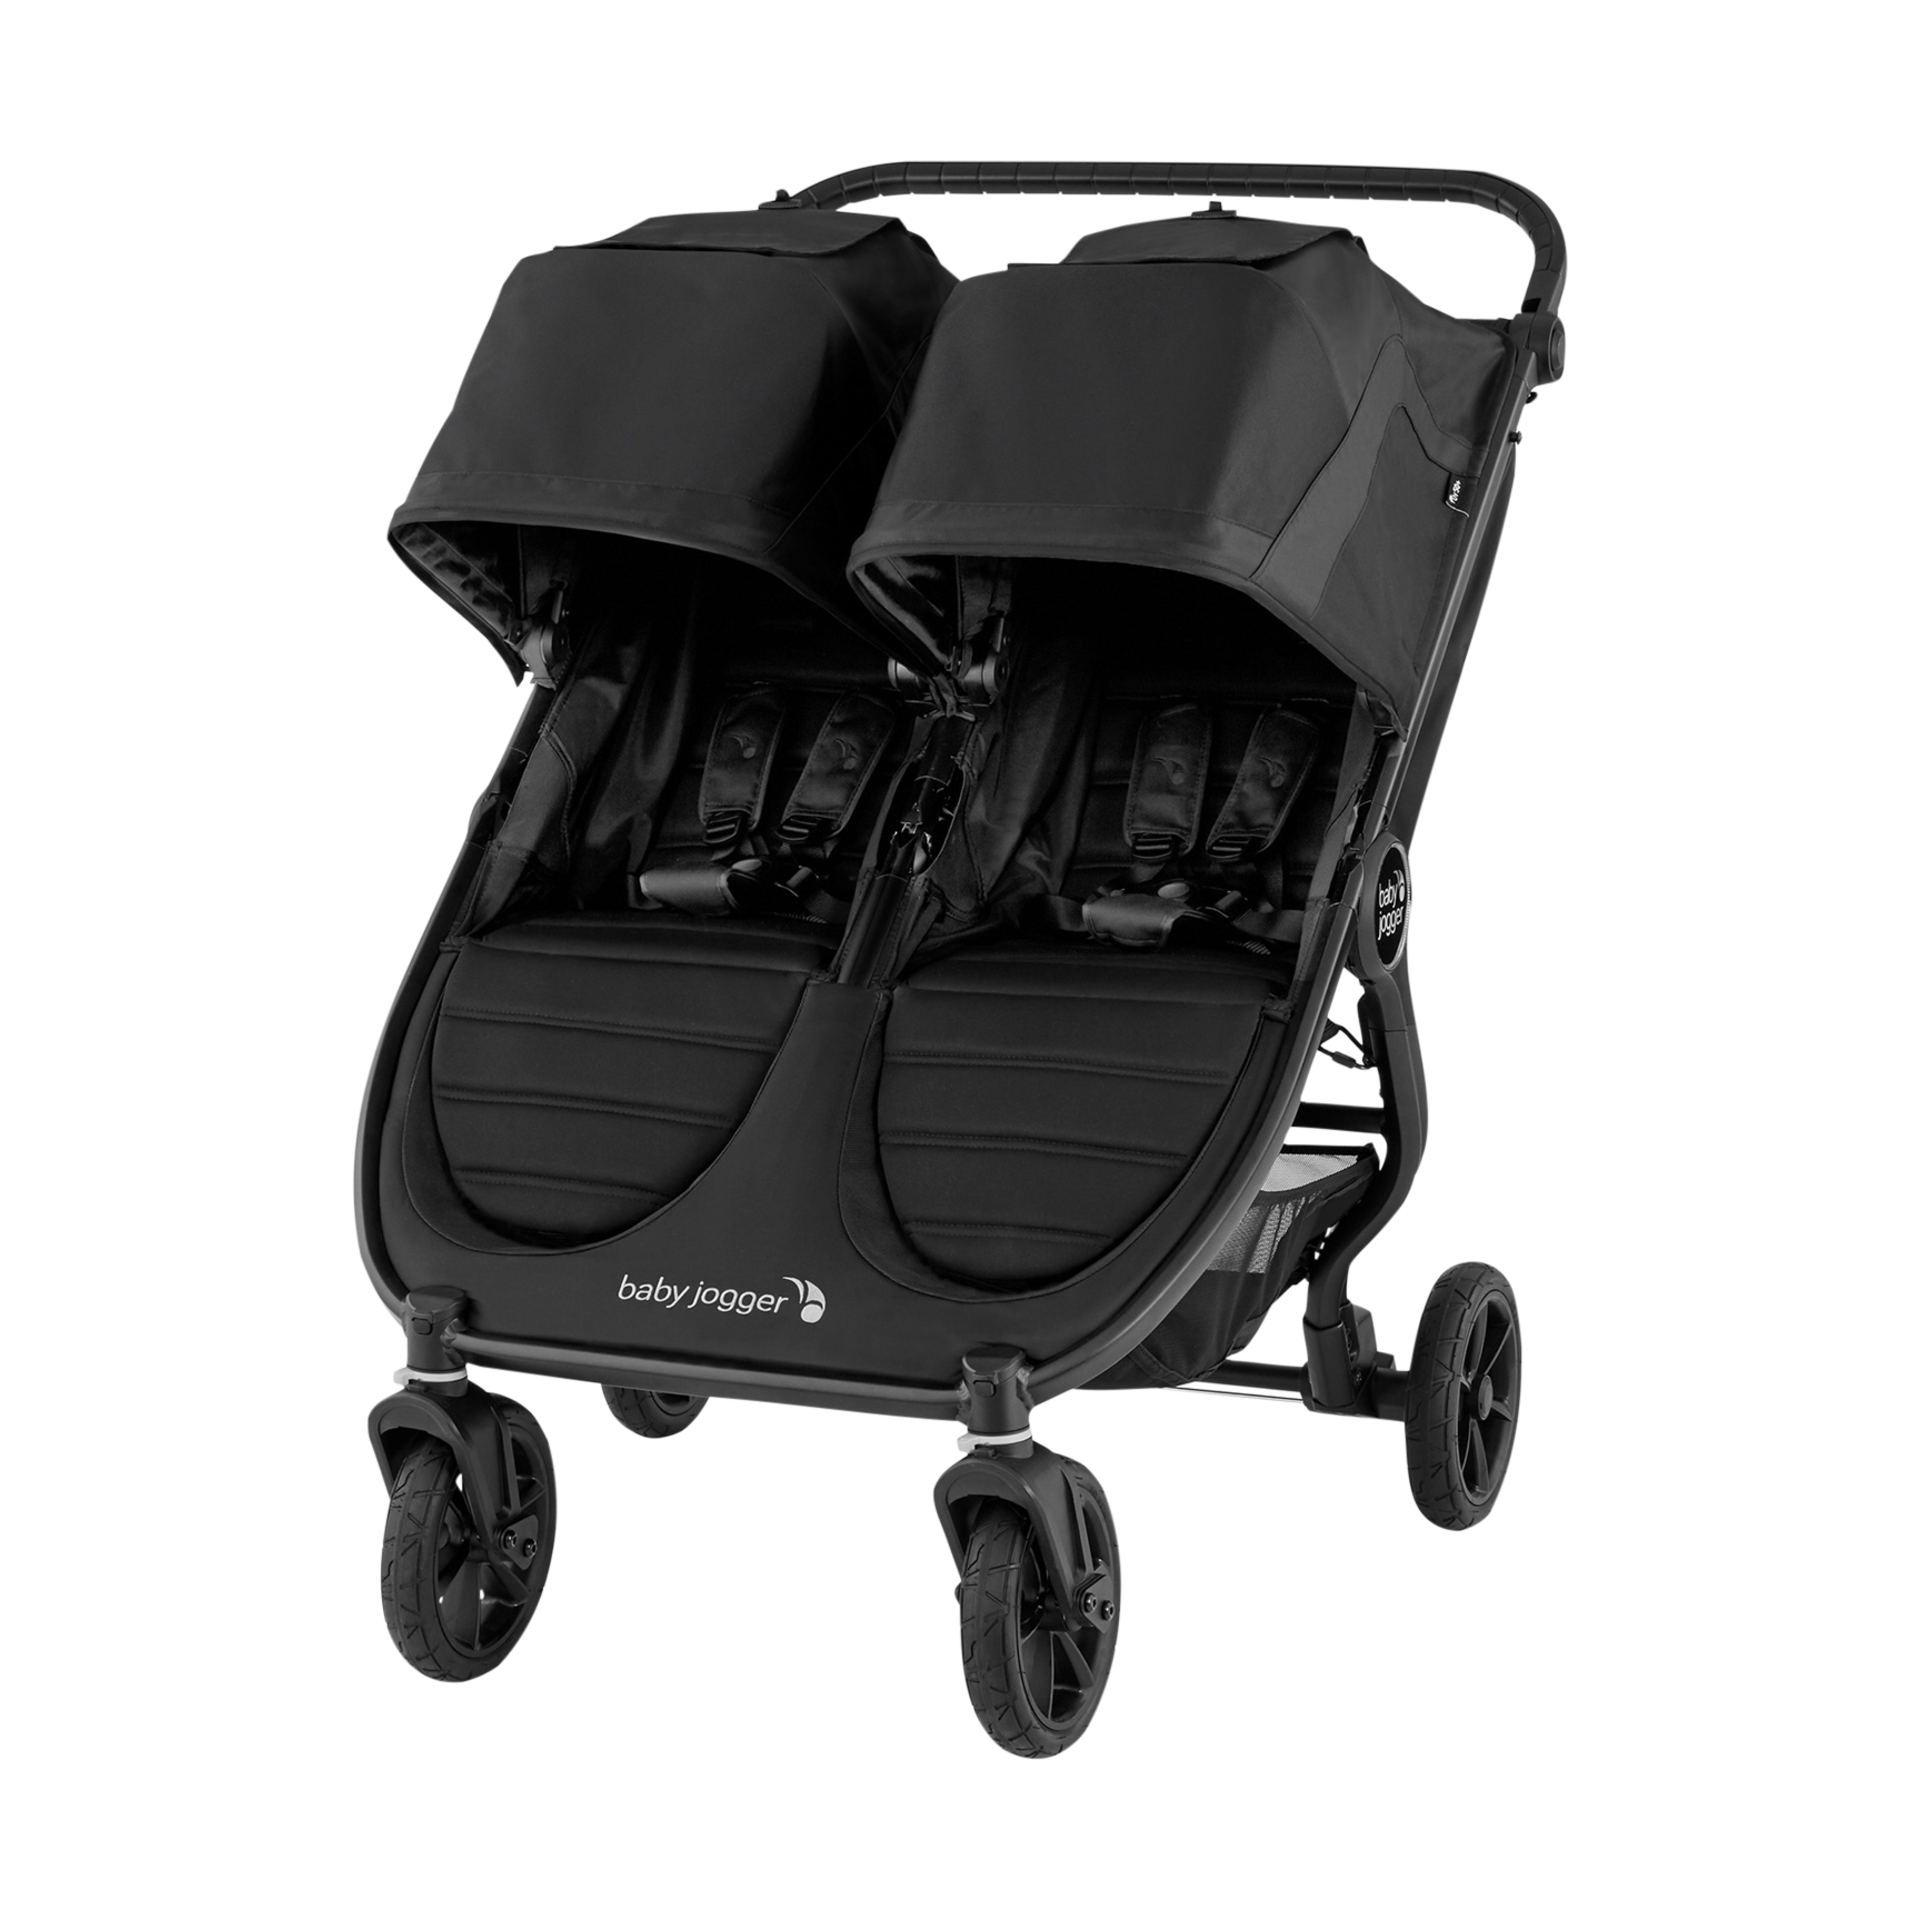 baby city mini double stroller